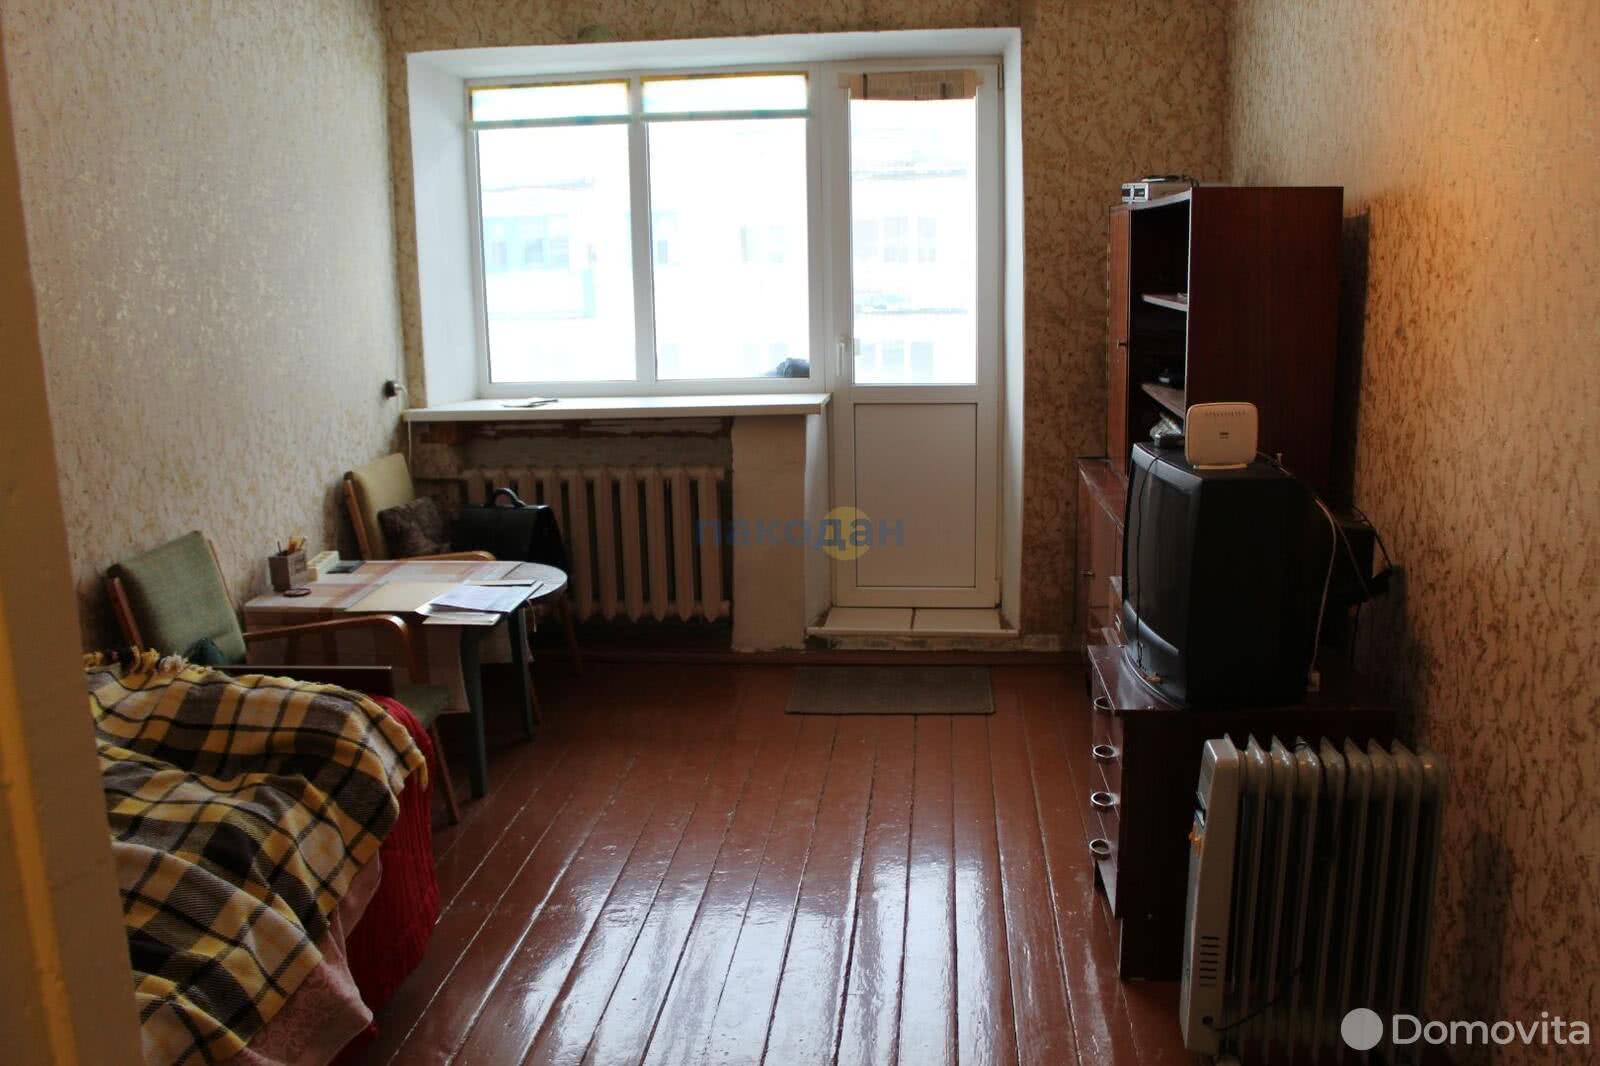 квартира, Ганцевичи, ул. Гагарина, д. 5, стоимость продажи 29 195 р.